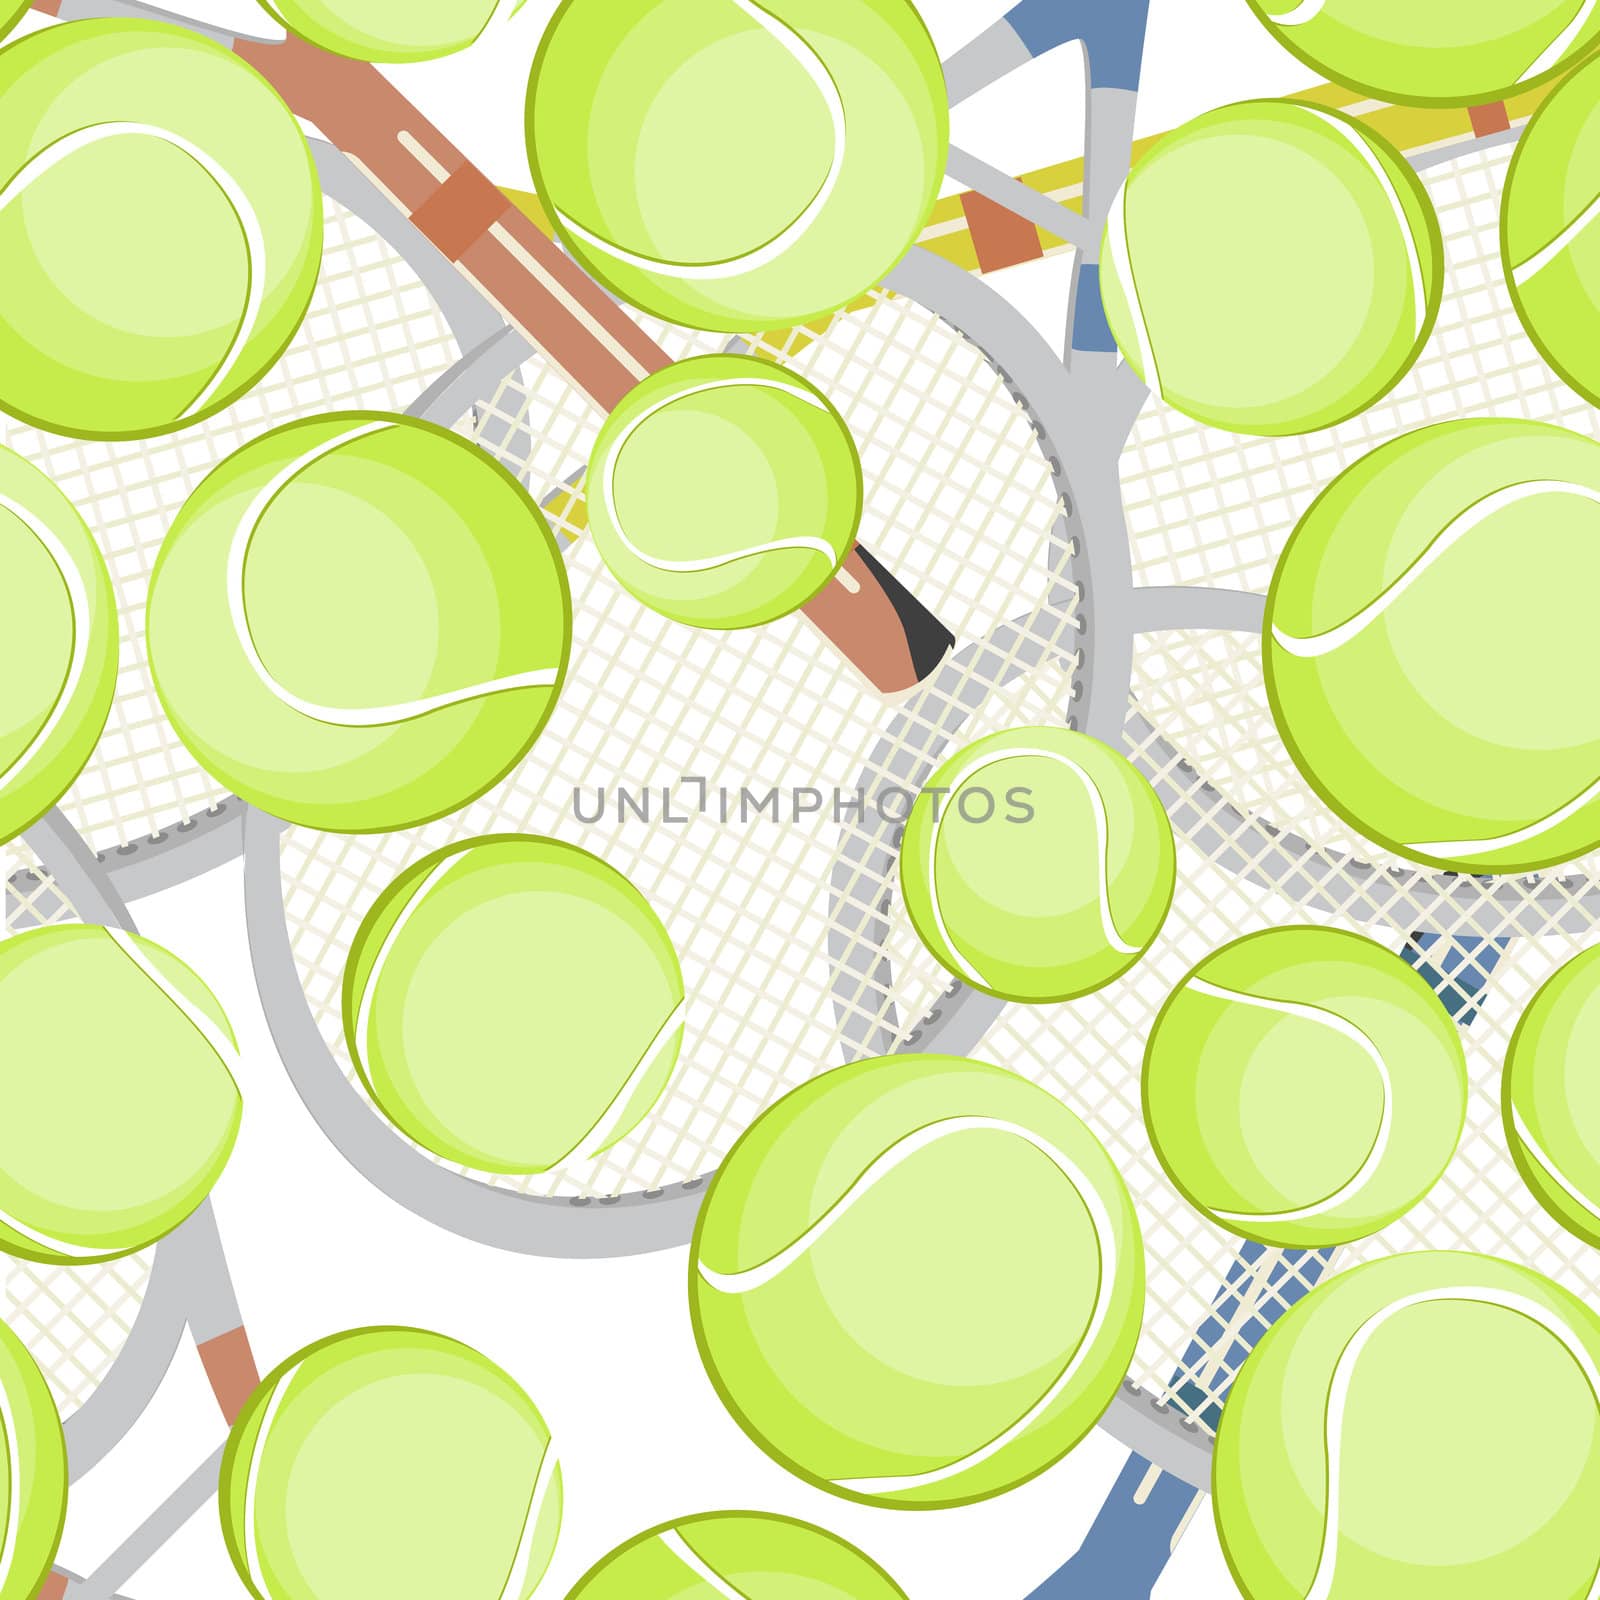 tennis balls pattern by Lirch